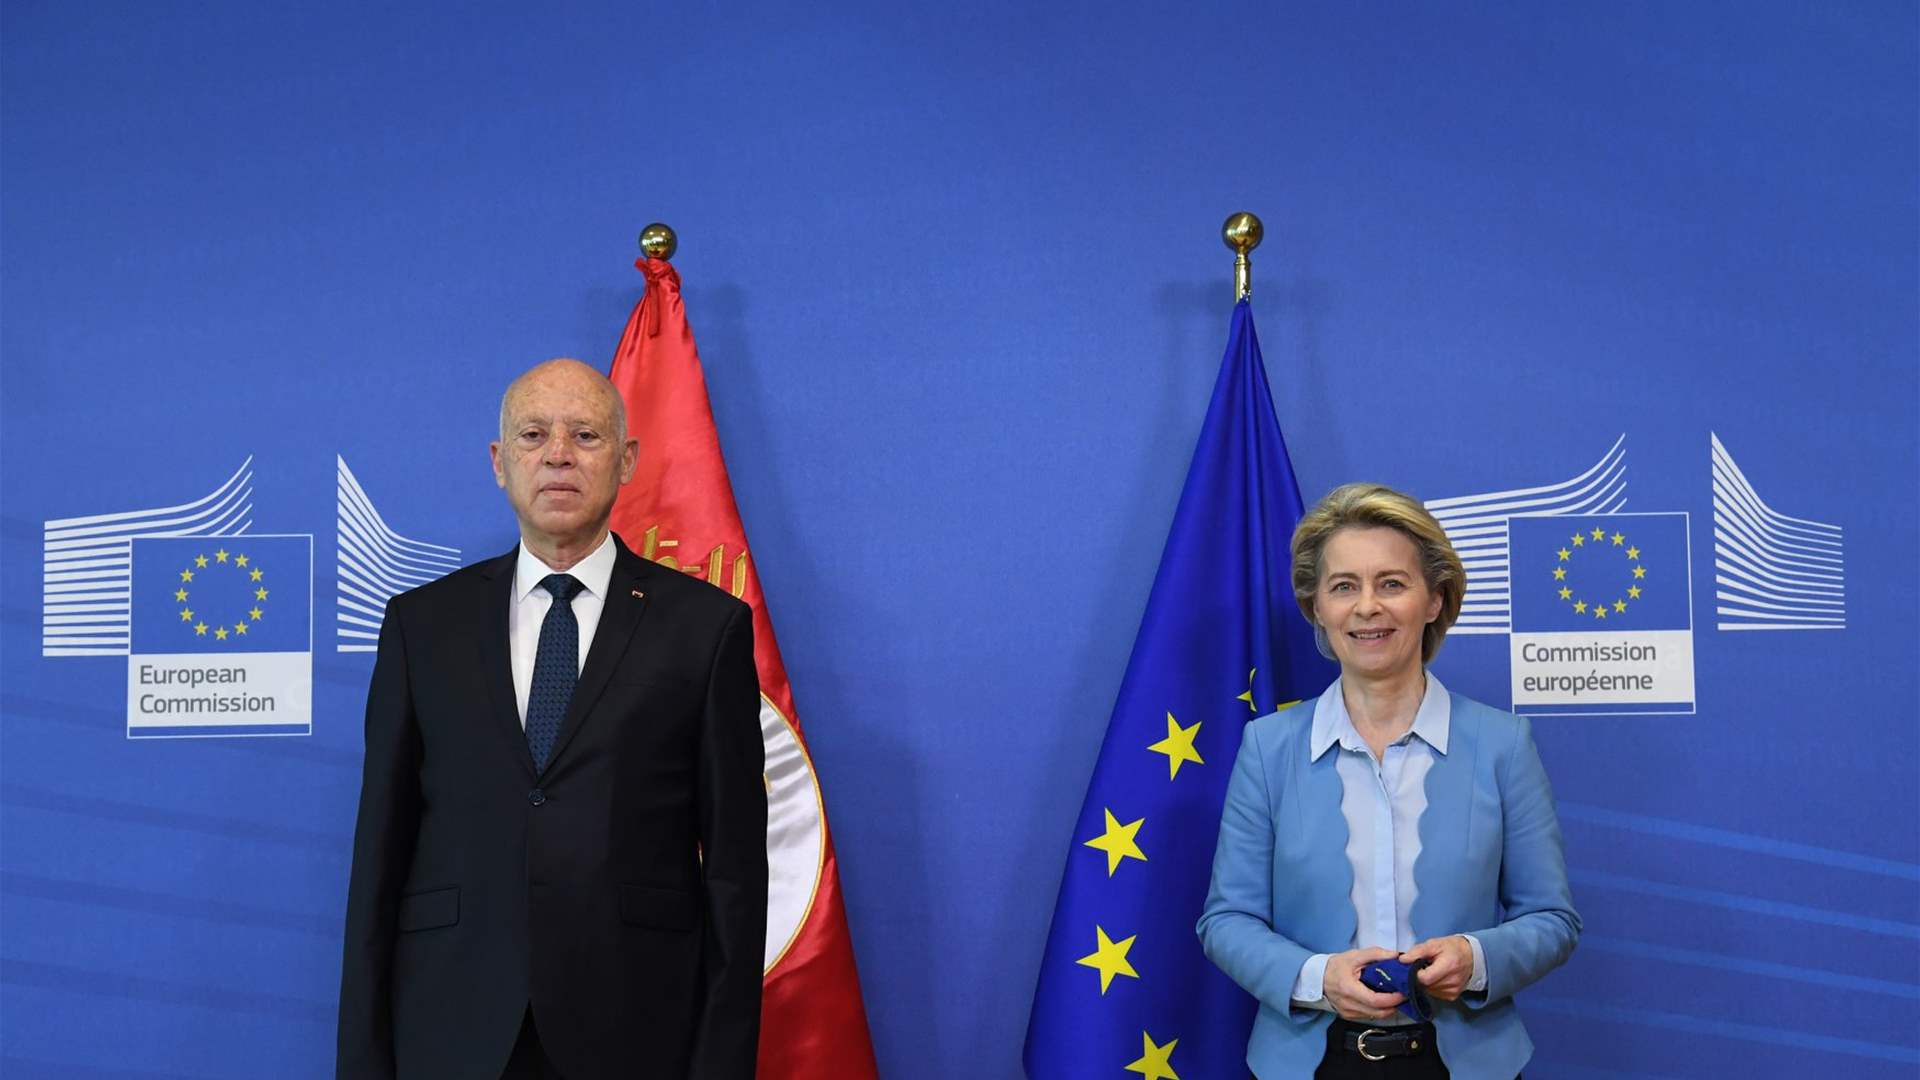 Tunisia and EU sign agreement on economy, migration